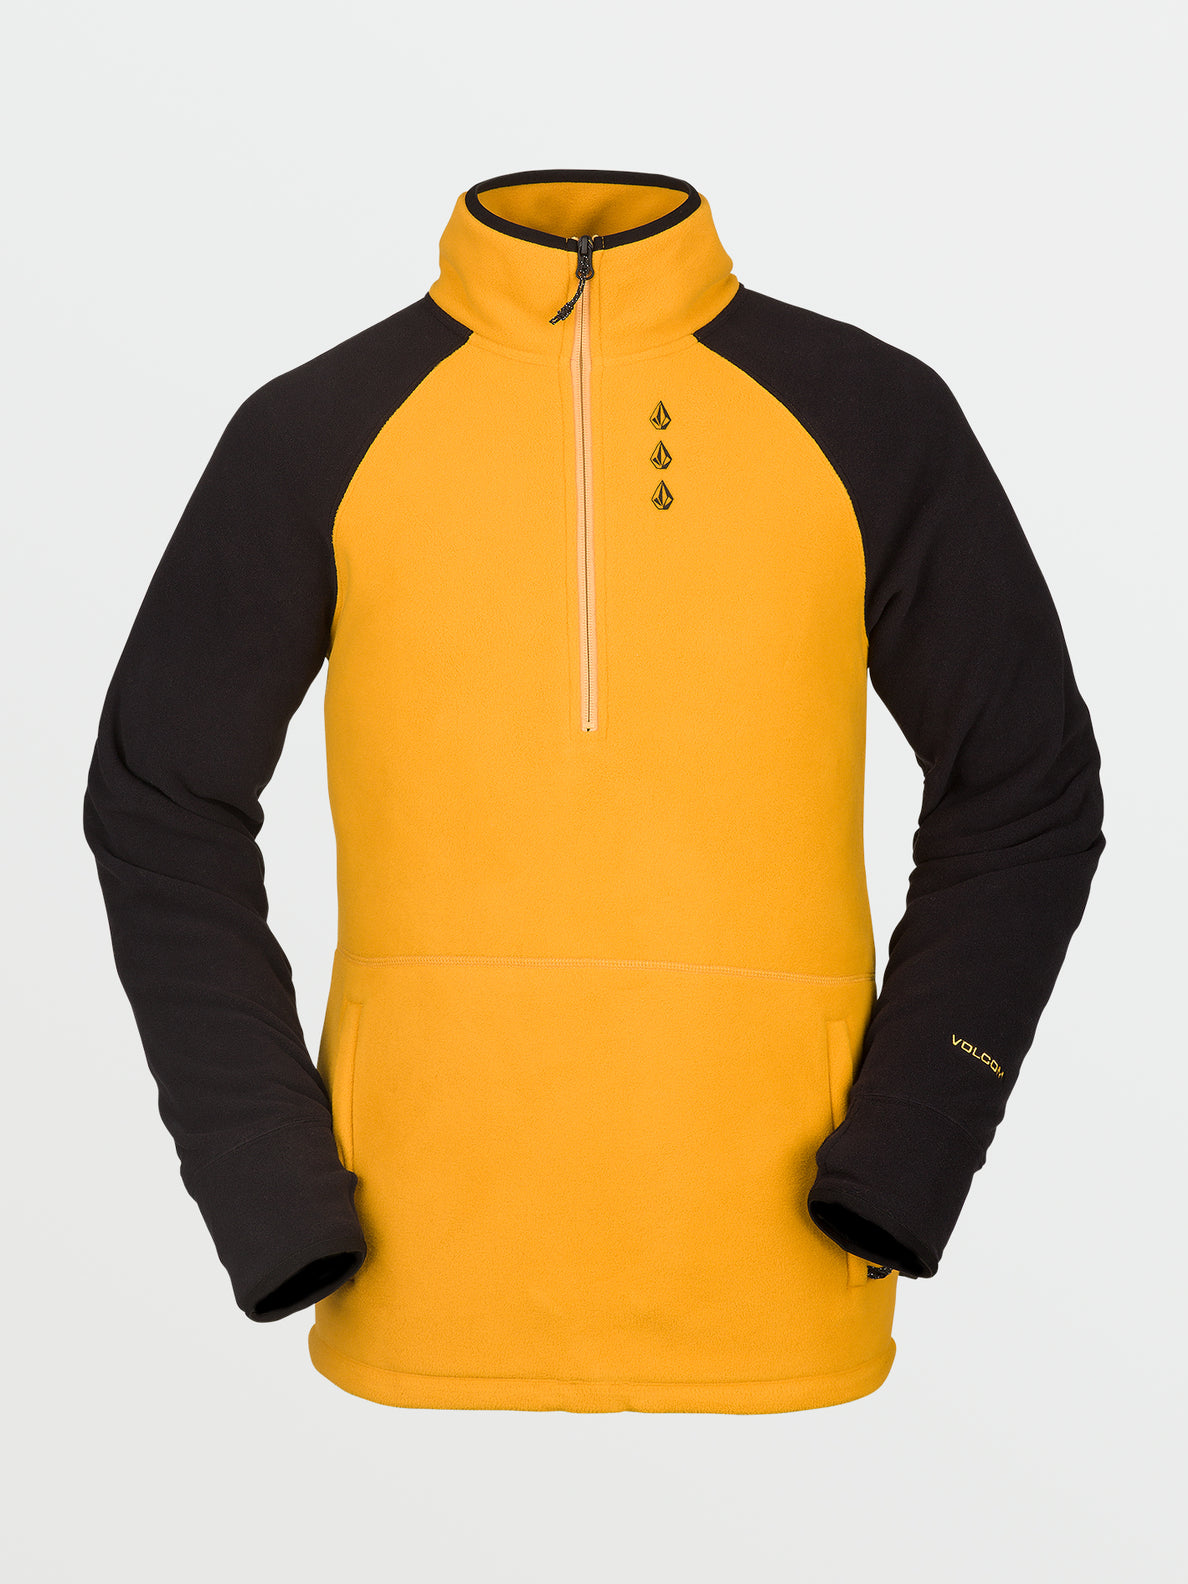 Polartec 1/2 Zip Sweatshirt - RESIN GOLD (G4152200_RSG) [F]